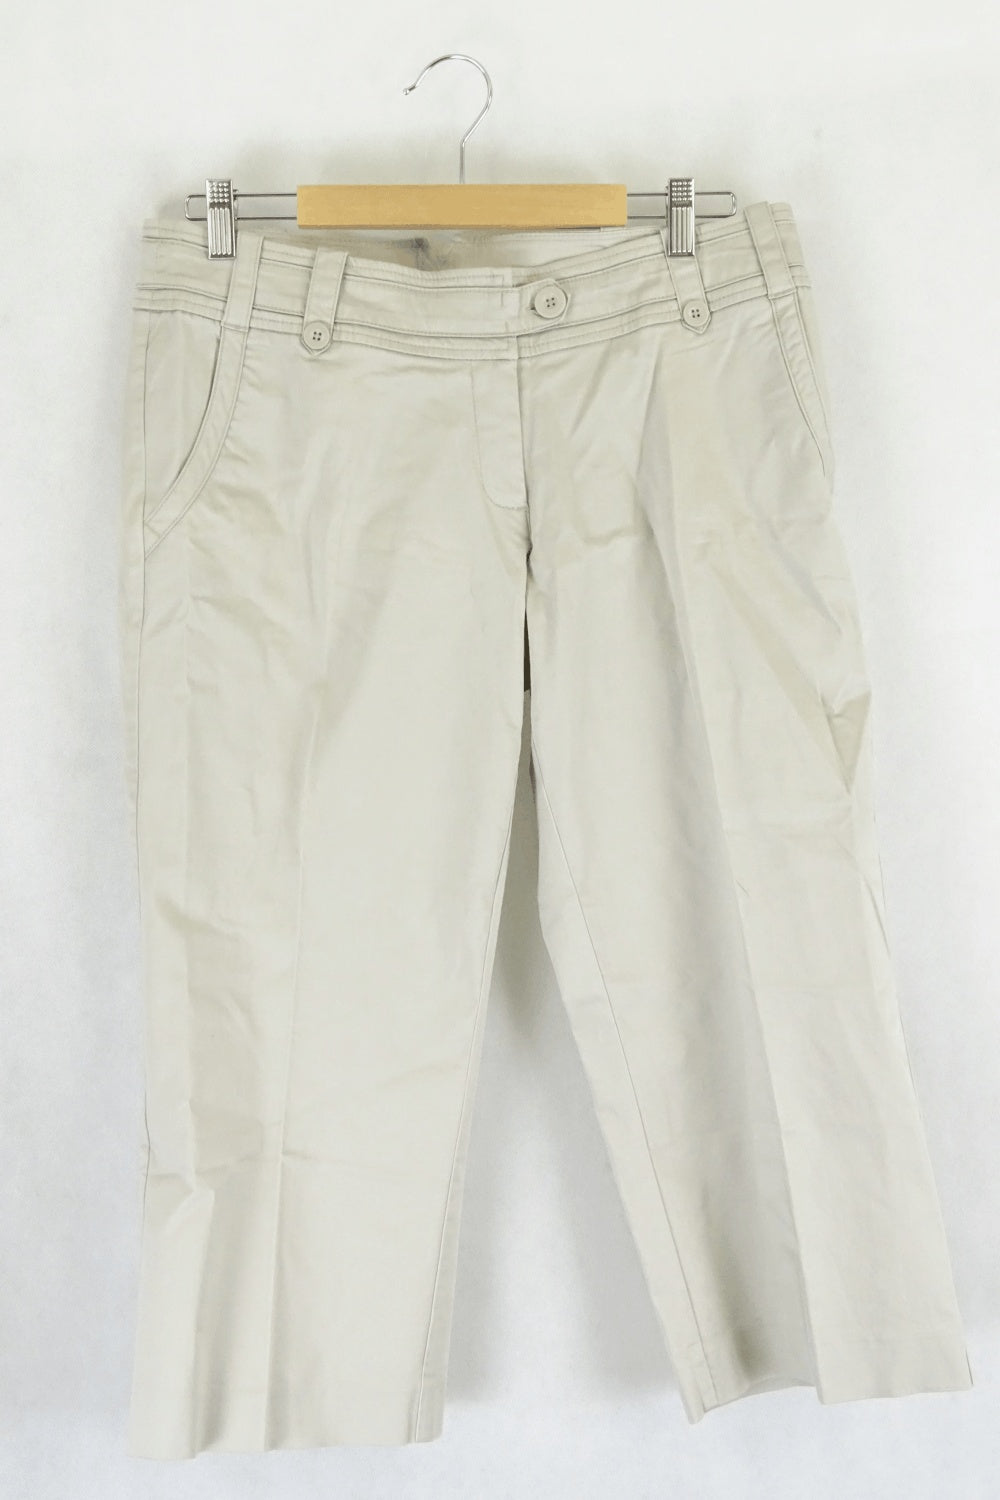 H&M Cream Pants 12